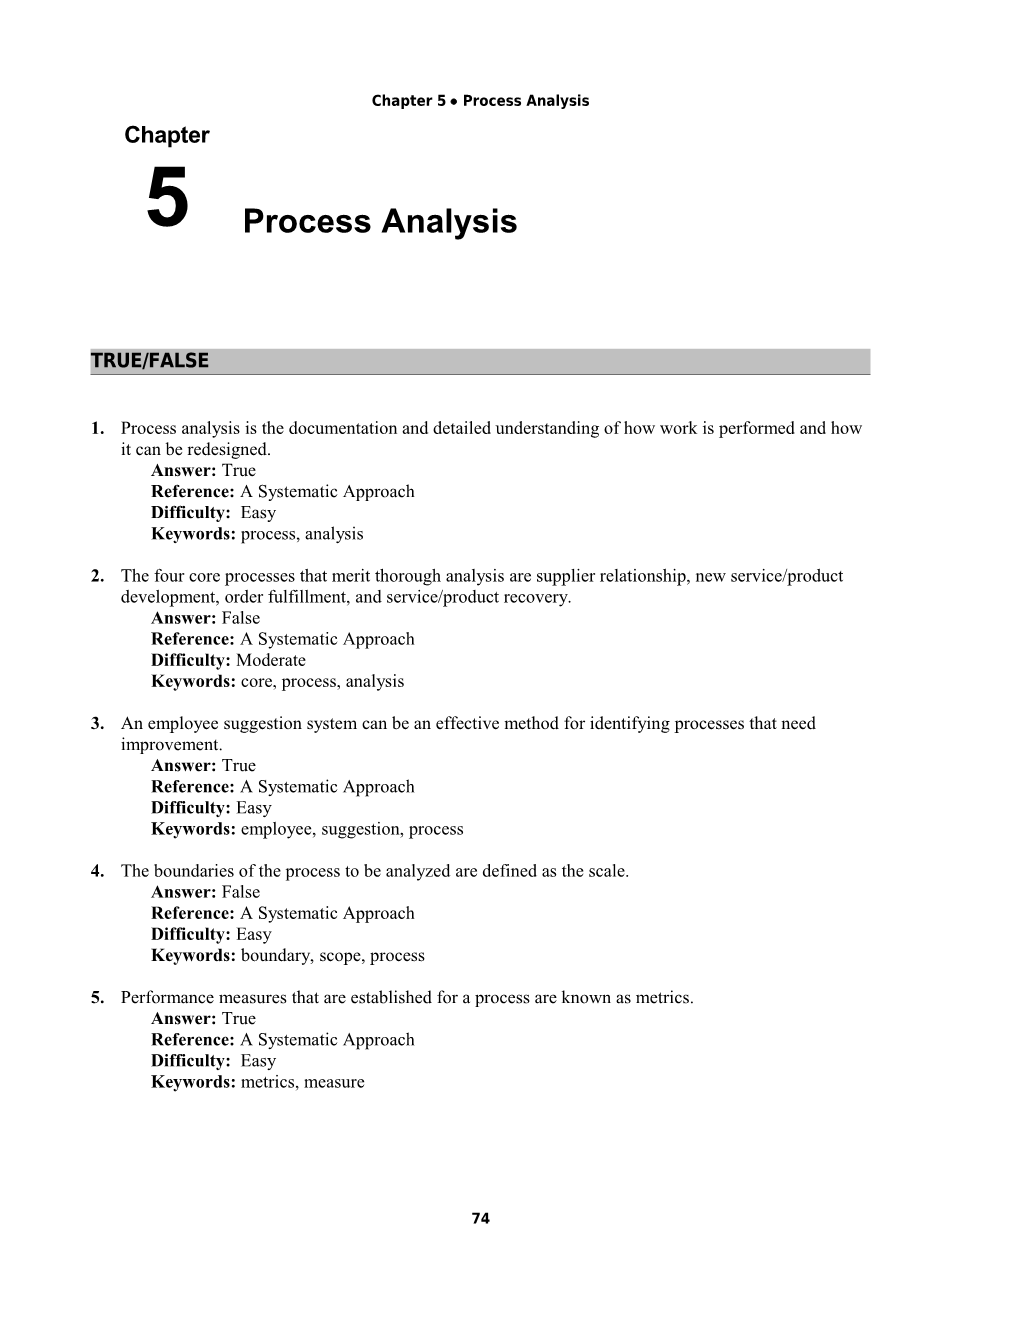 Chapter 5 Process Analysis